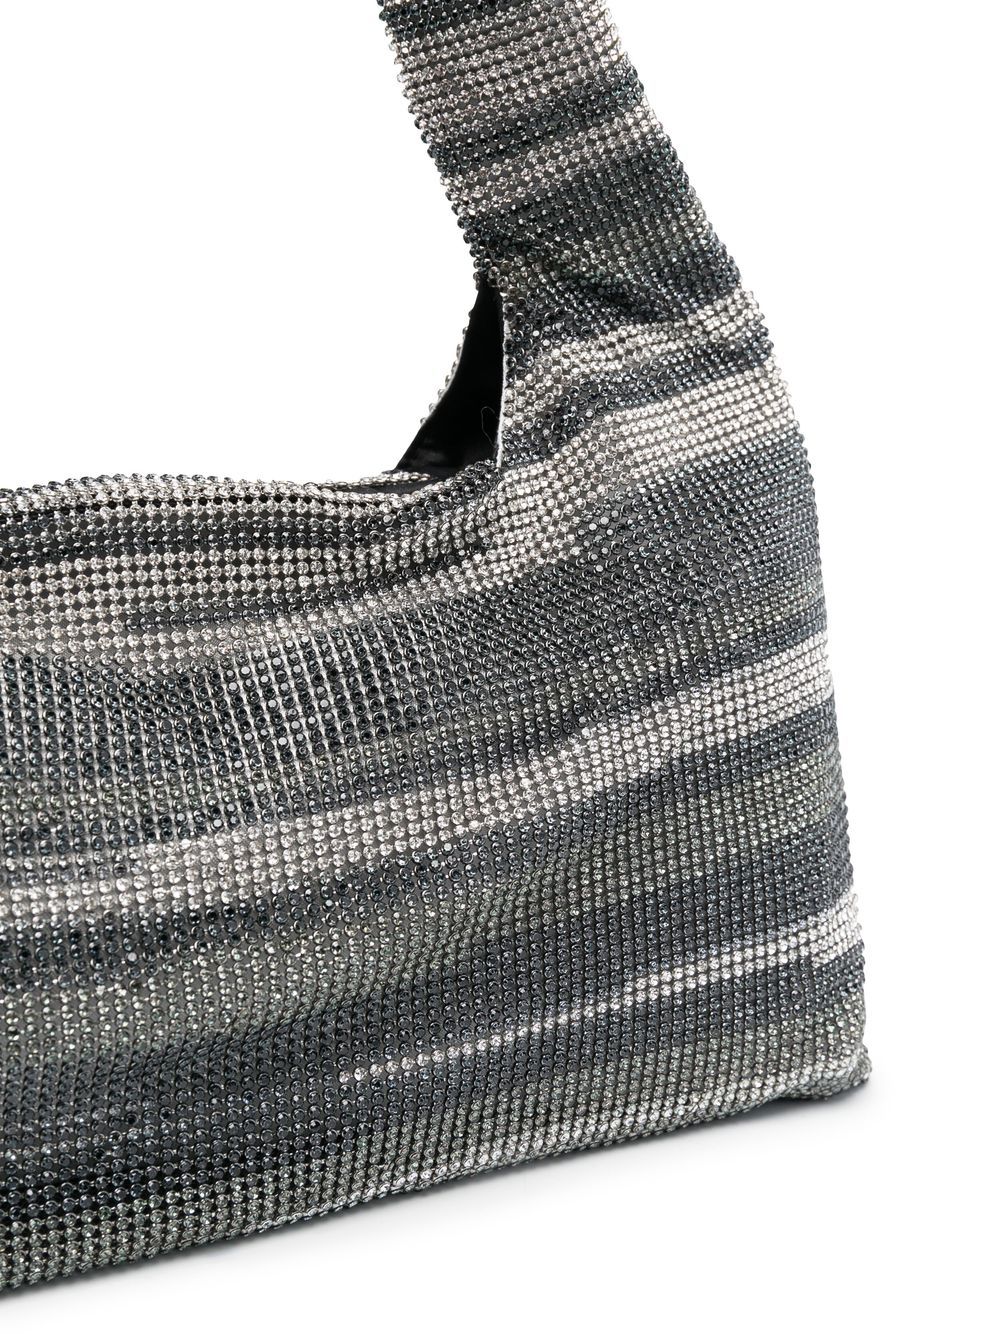 ARMPIT 晶饰网纱手提包